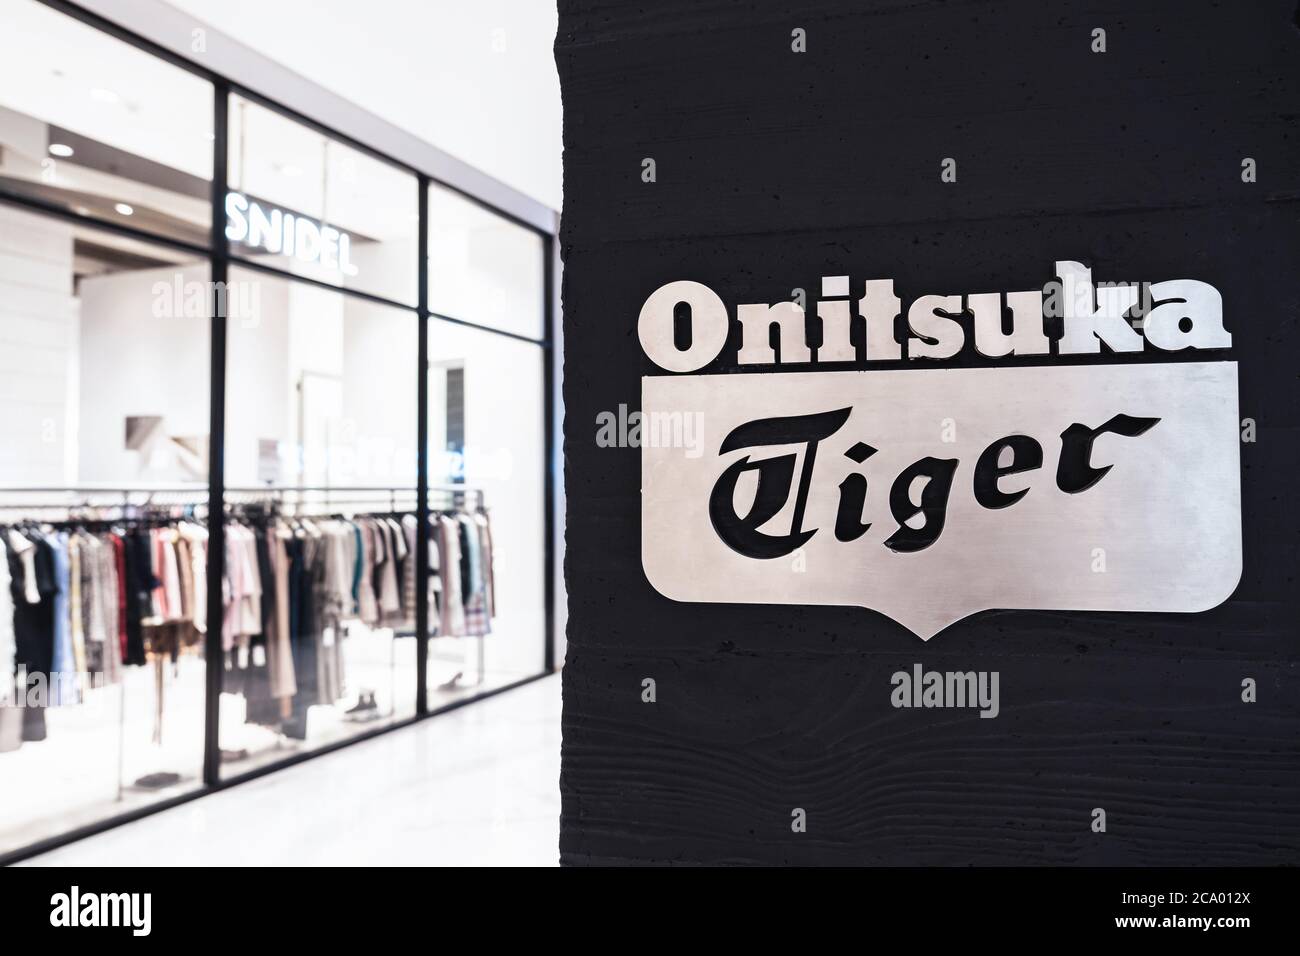 onitsuka tiger outlet thailand